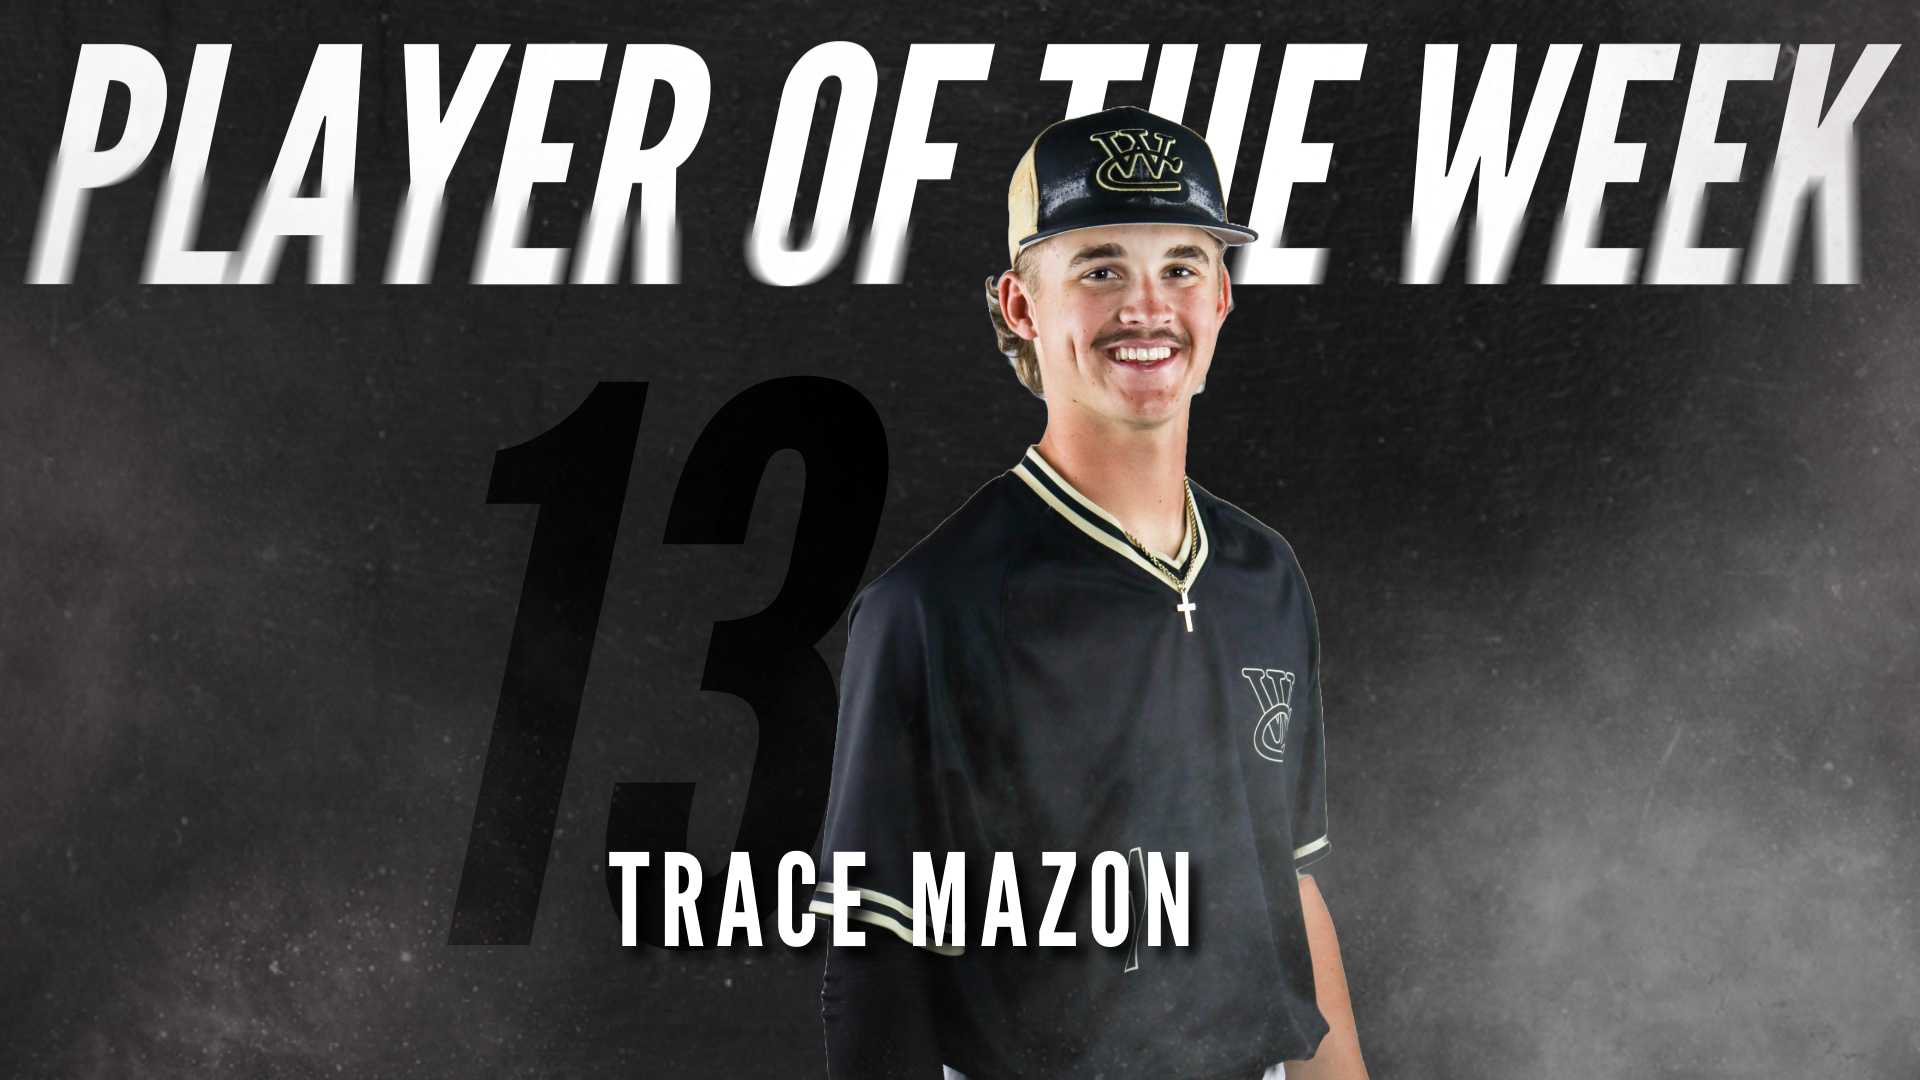 Mazon named NTJCAC baseball player of the week